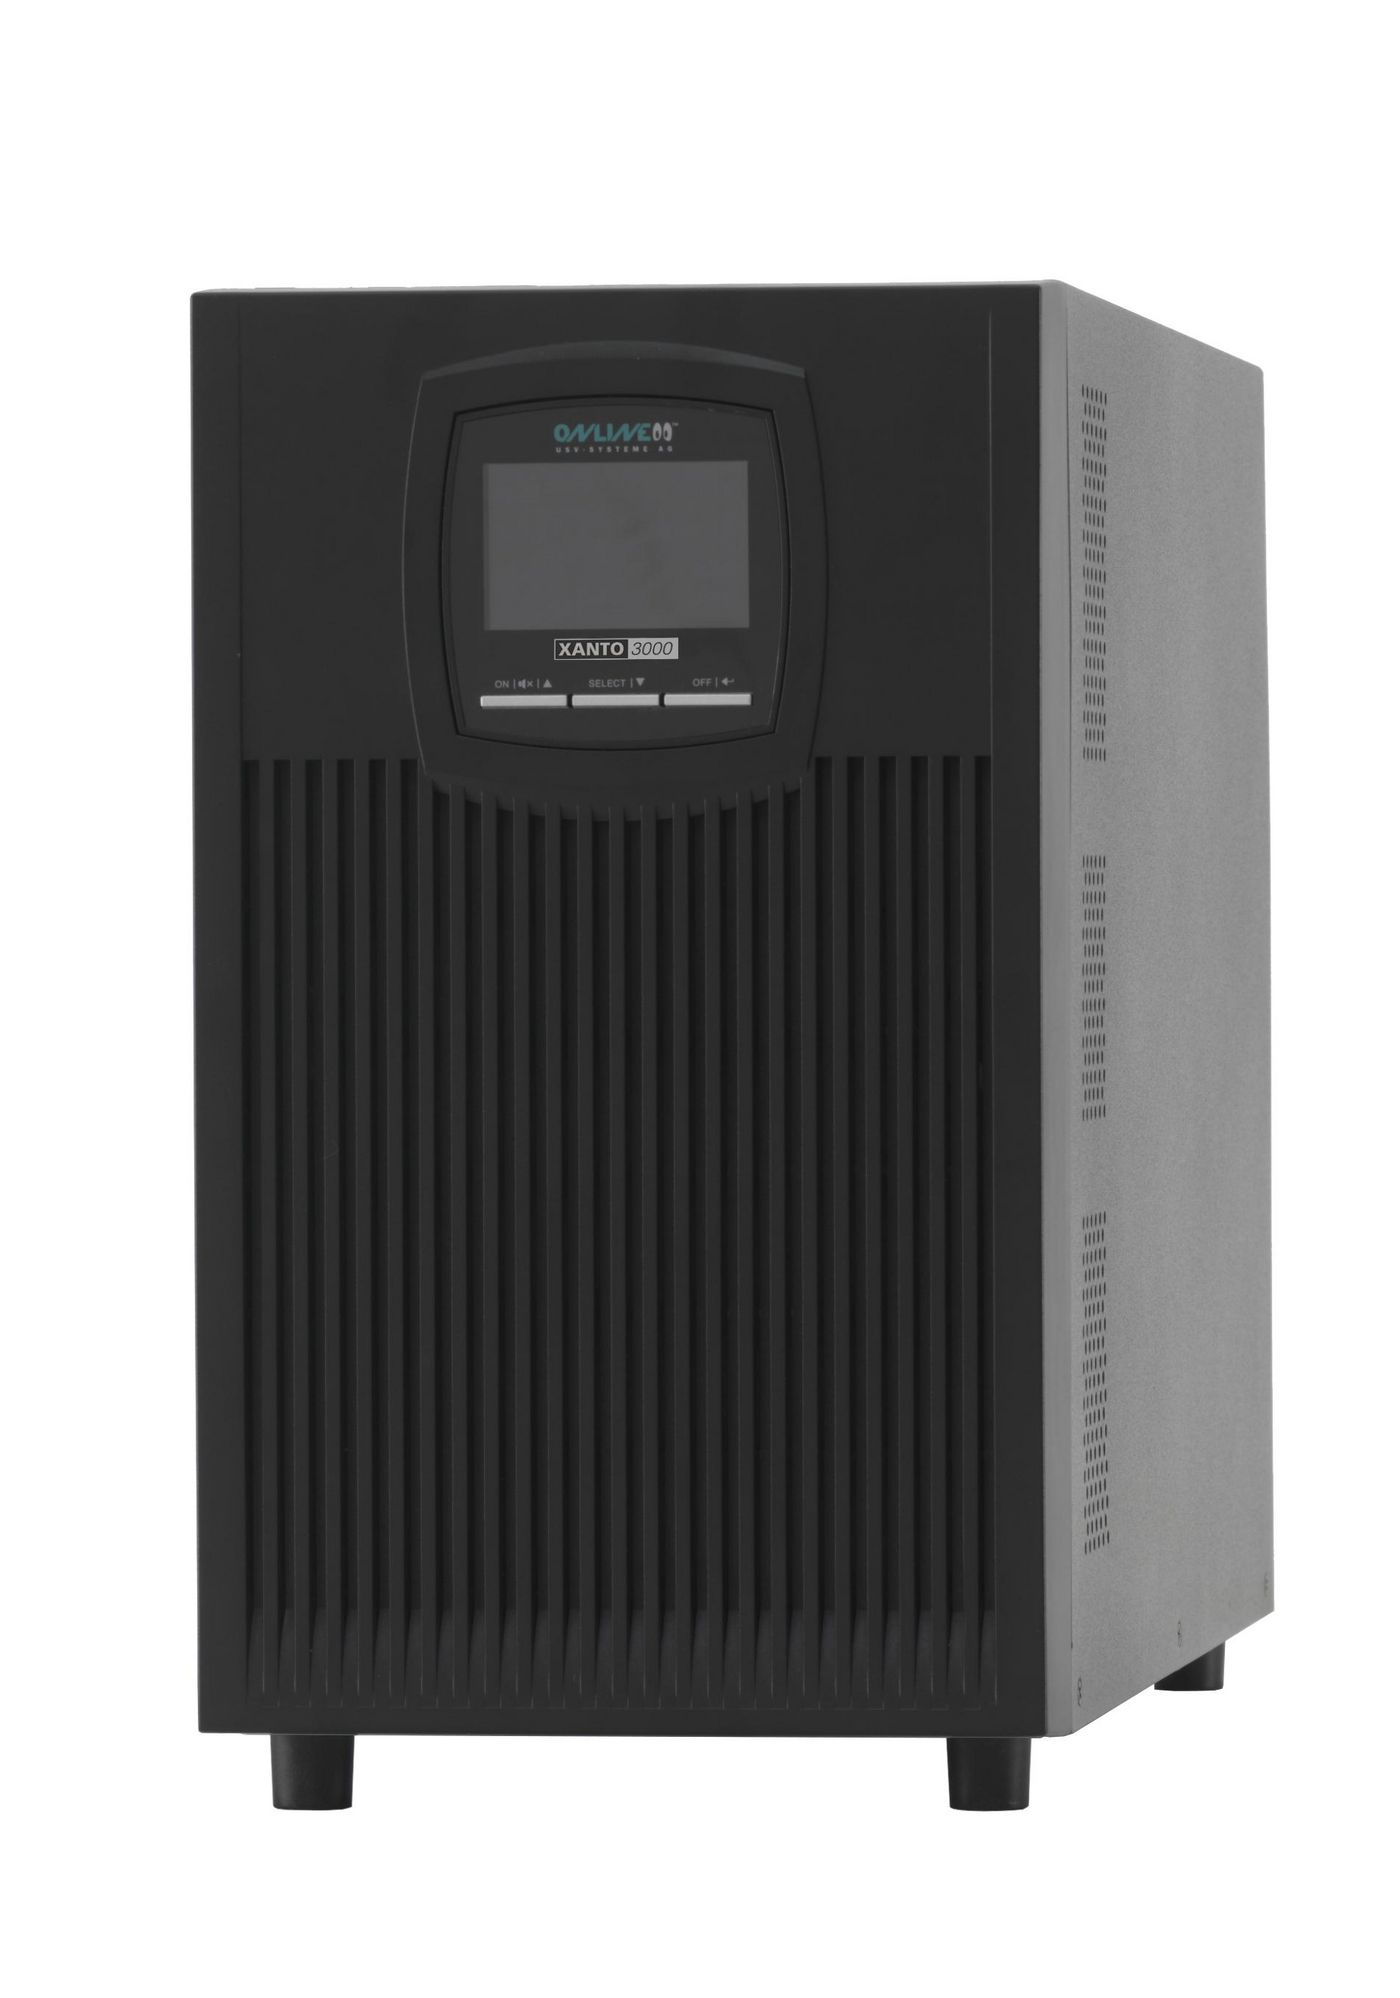 Online-USV-Systeme X3000 W128270321 Xanto 3000 Double-Conversion 